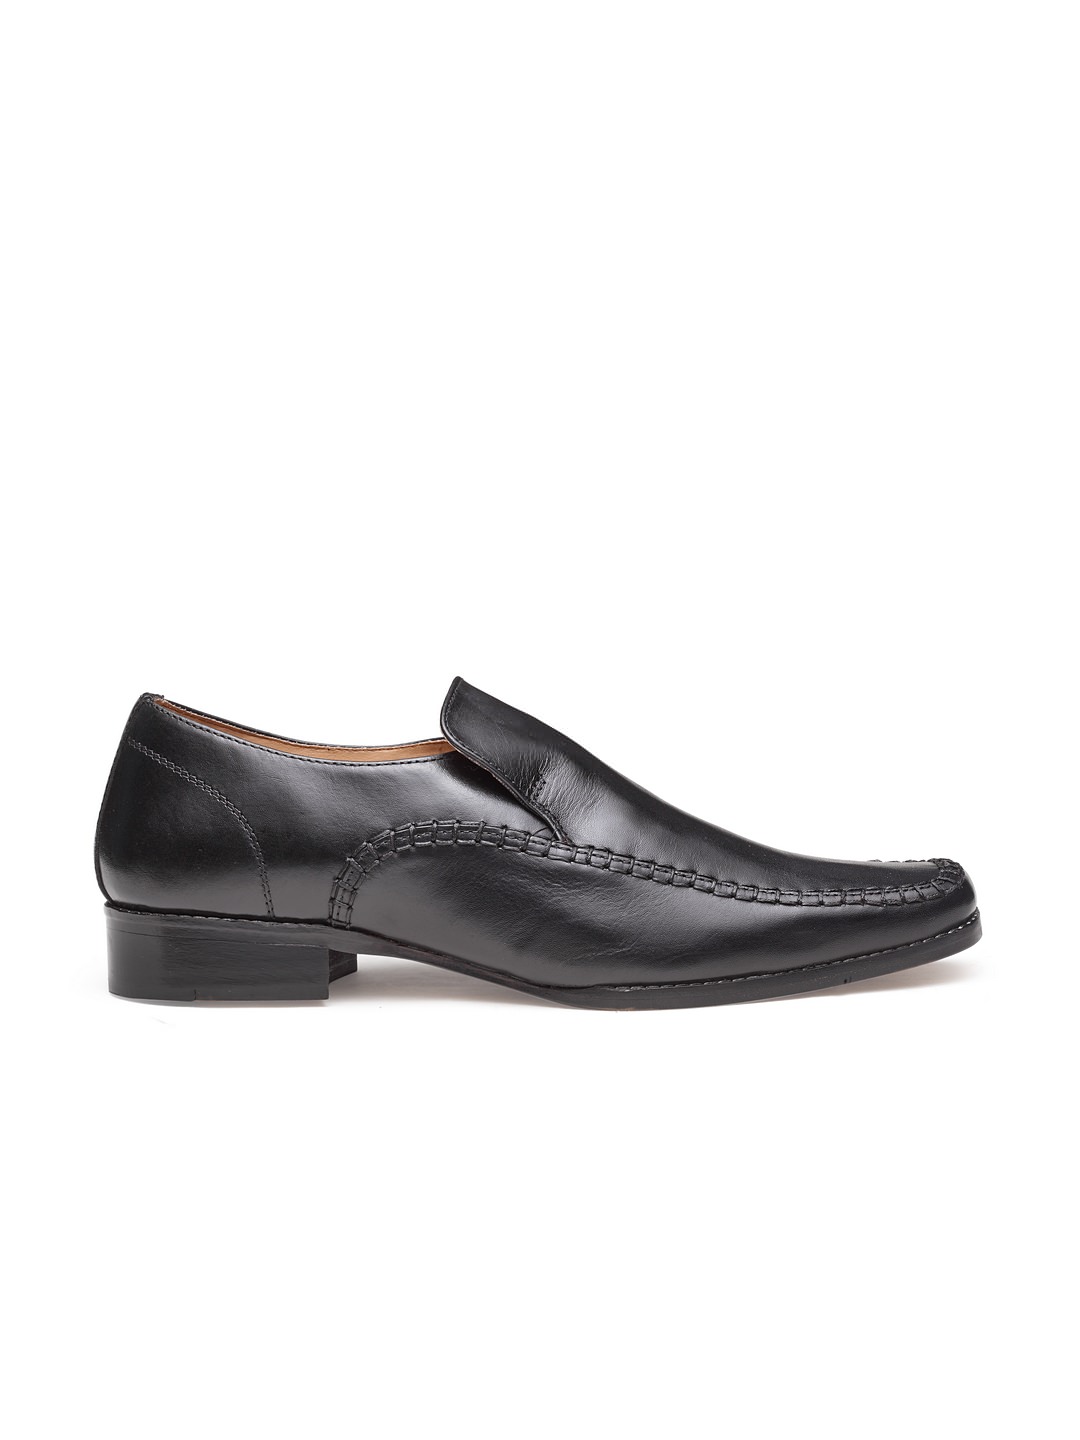 Buy Genuine Leather Semi-formal Slip On shoes for Men's